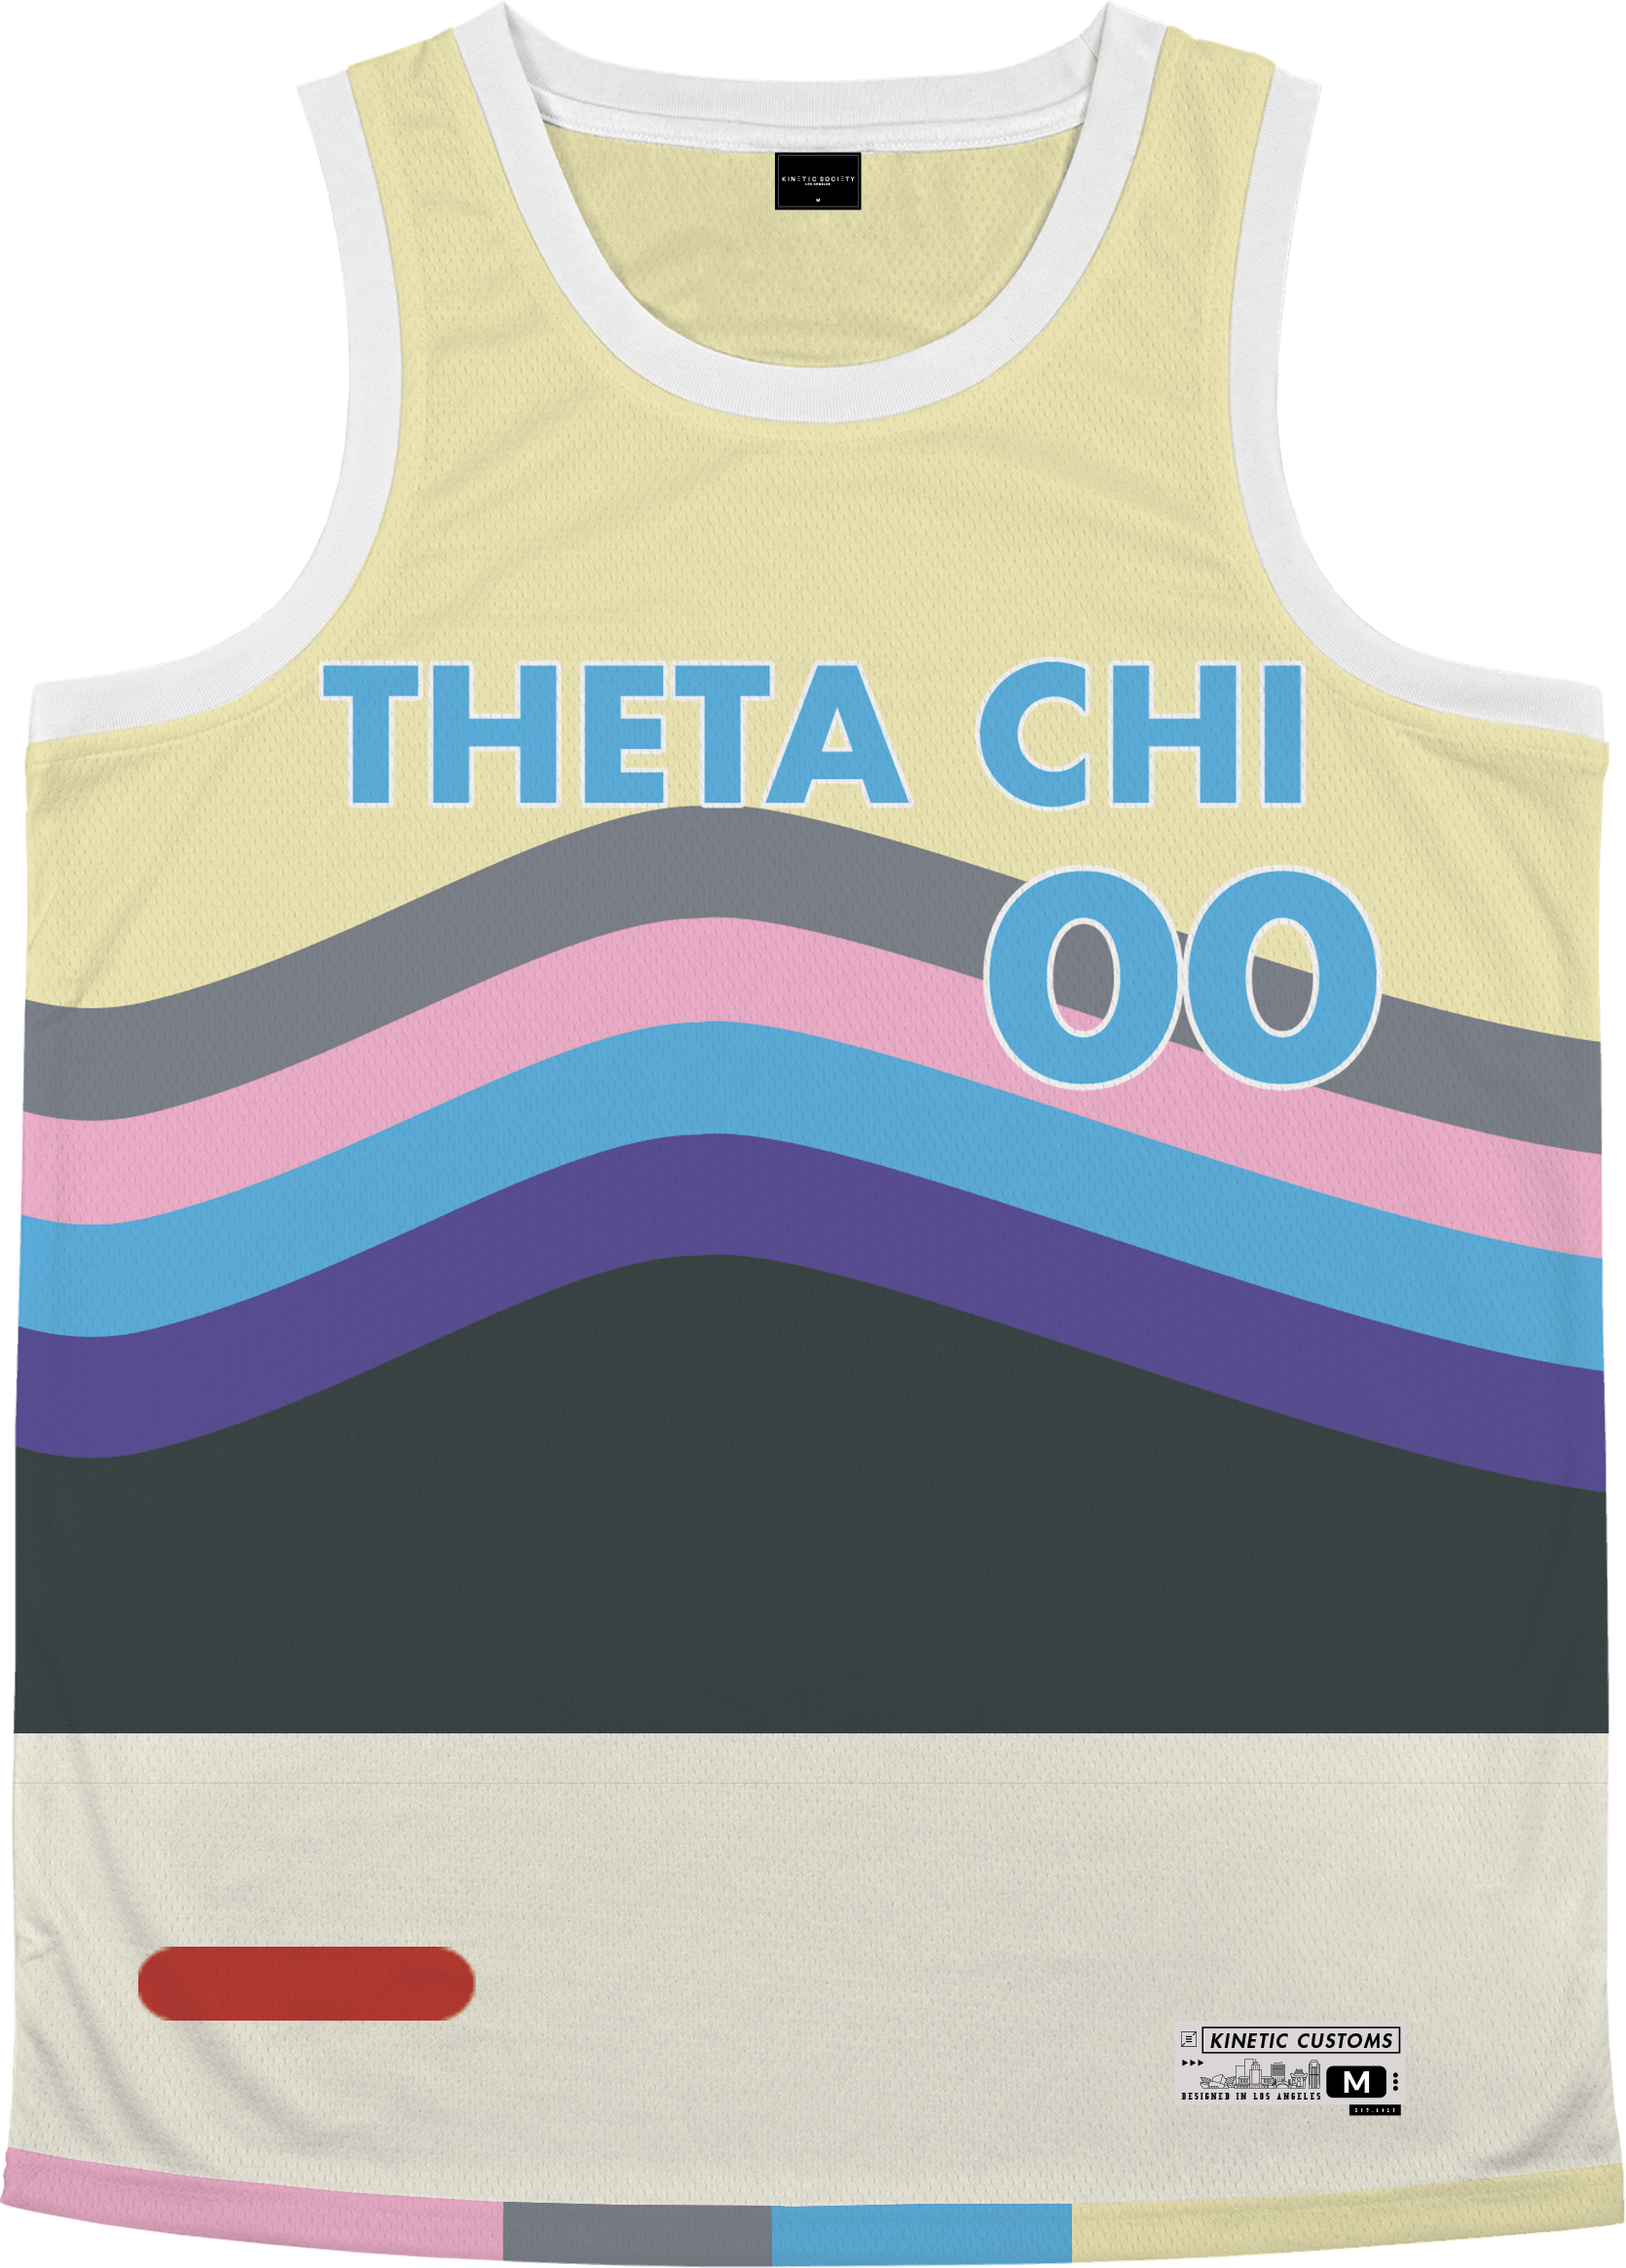 Theta Chi - Swirl Basketball Jersey - Kinetic Society